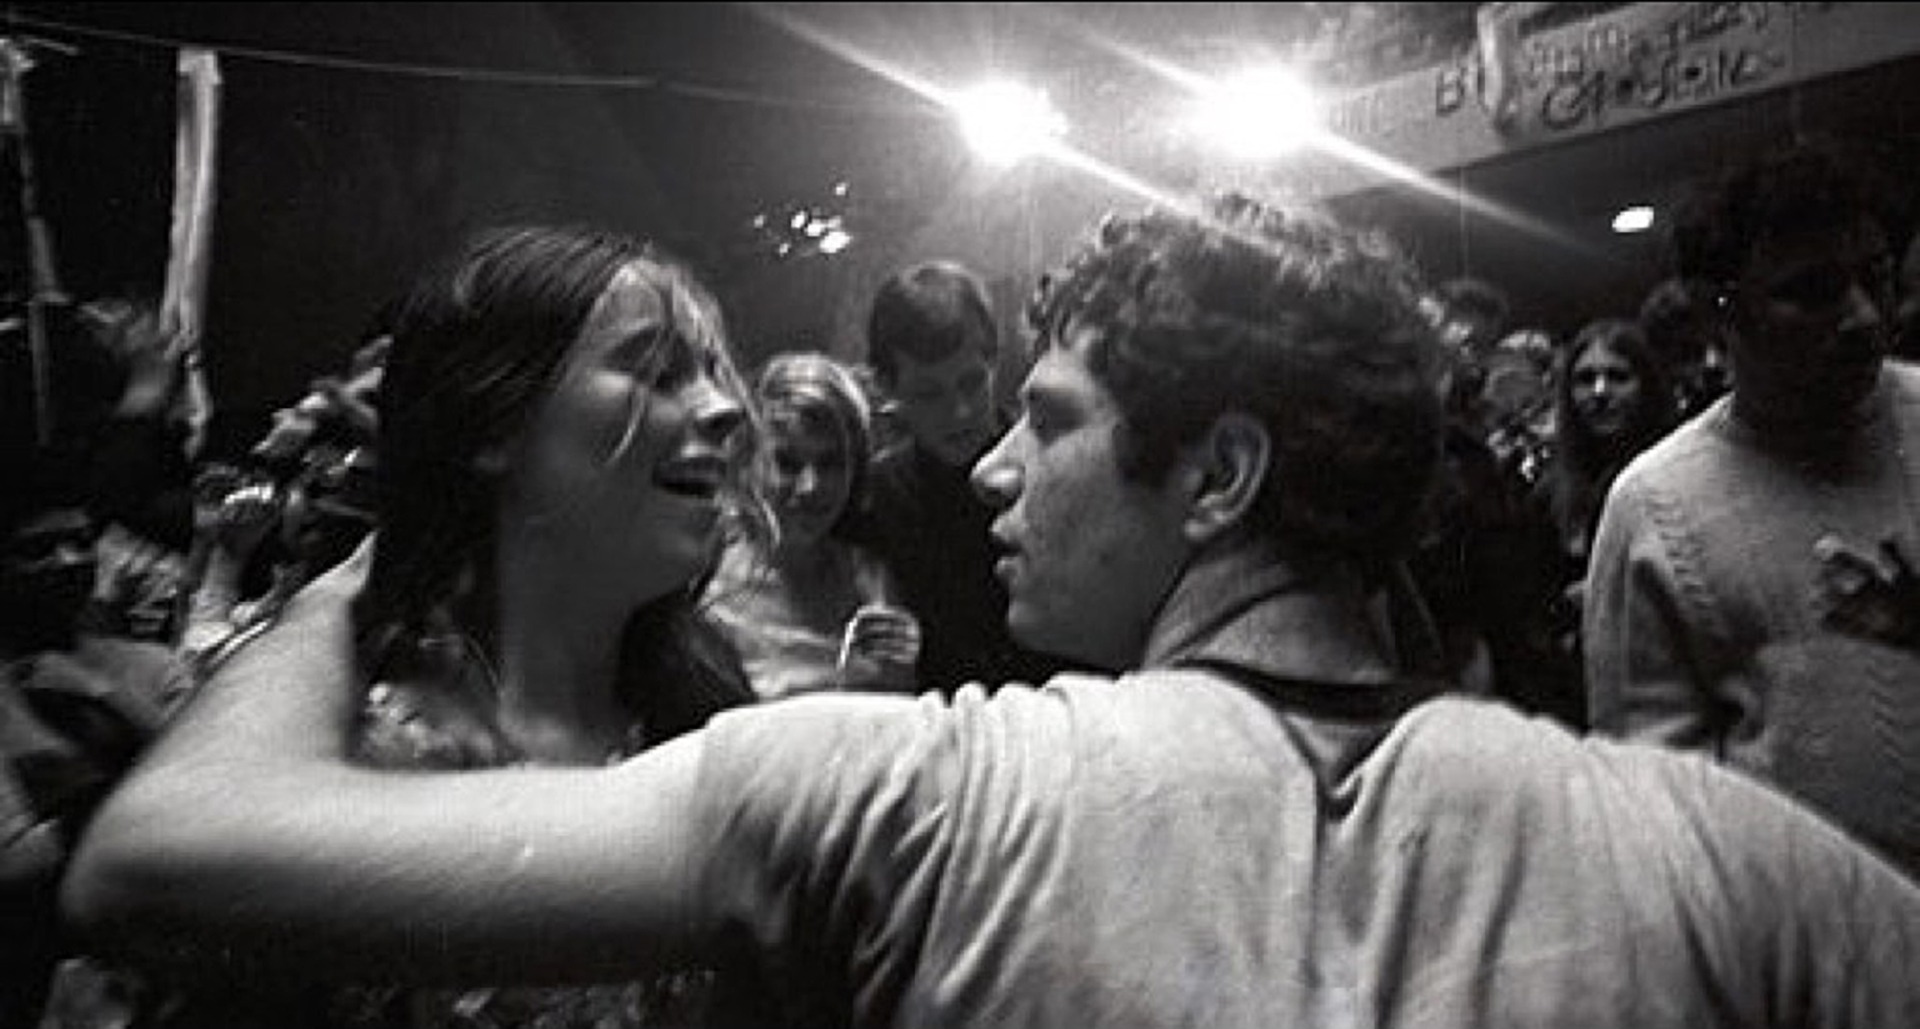 Ground Zero: The Weekend that started the Haight-Ashbury hippie era